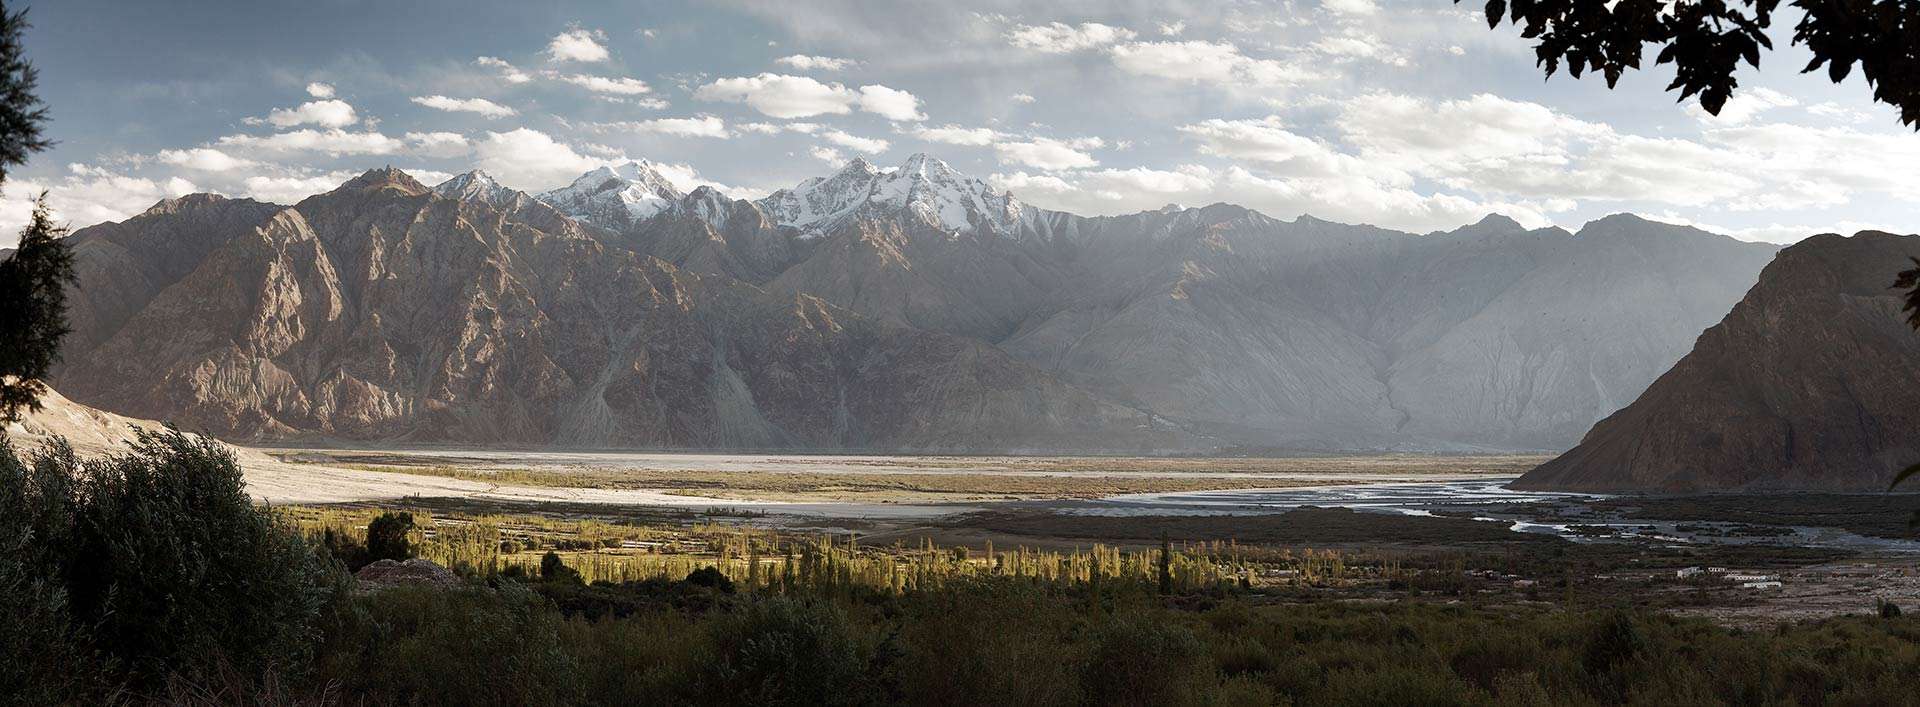 Nubra valley, Indian Himalayas - Ladakh